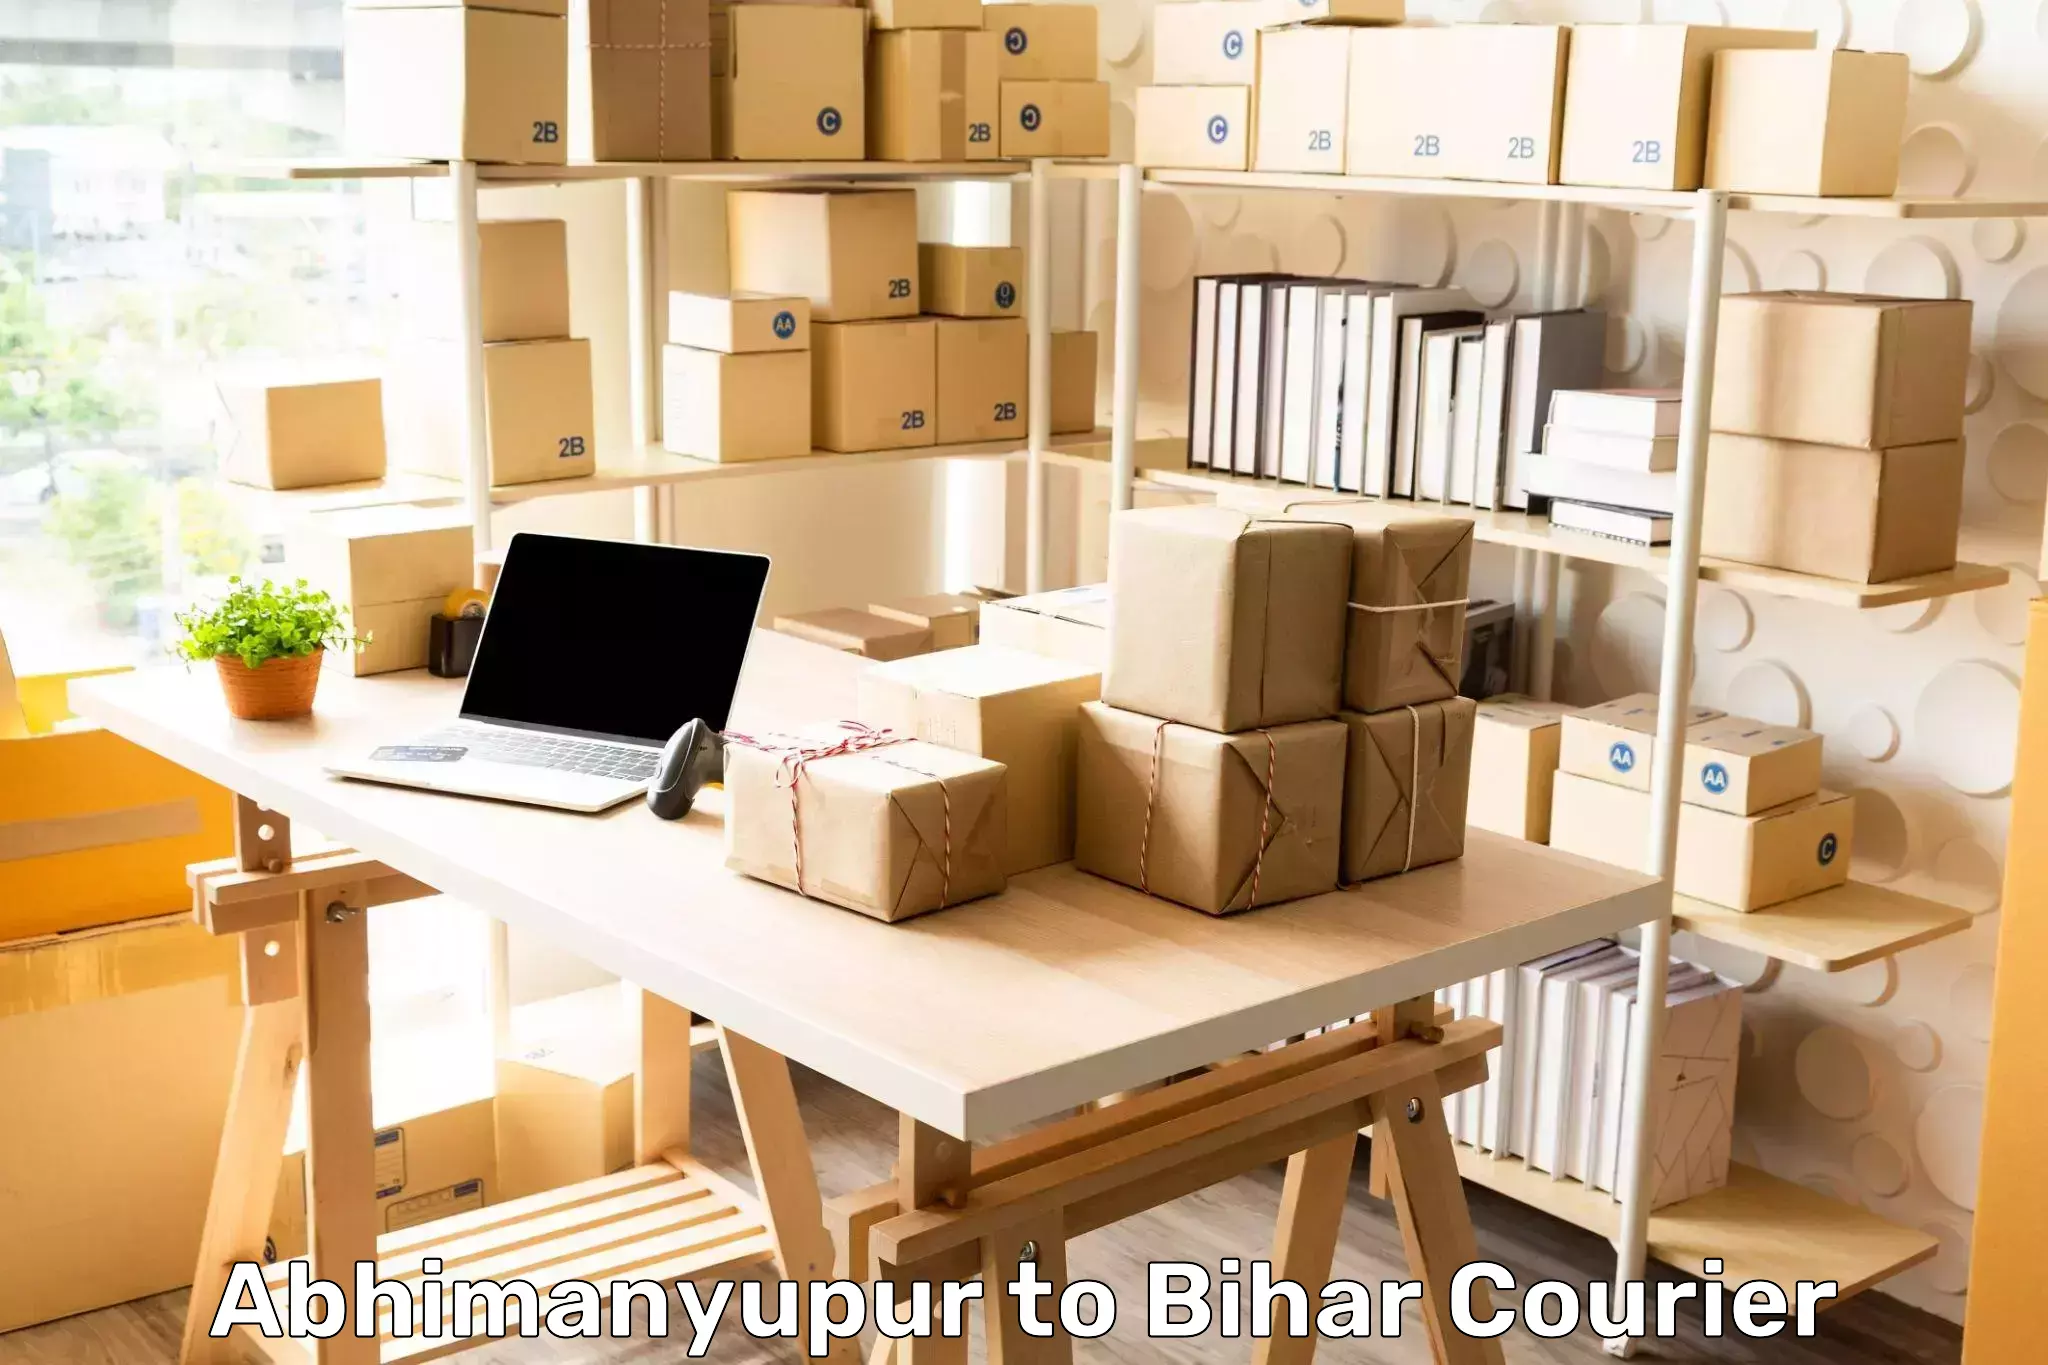 Efficient freight service Abhimanyupur to Bihar